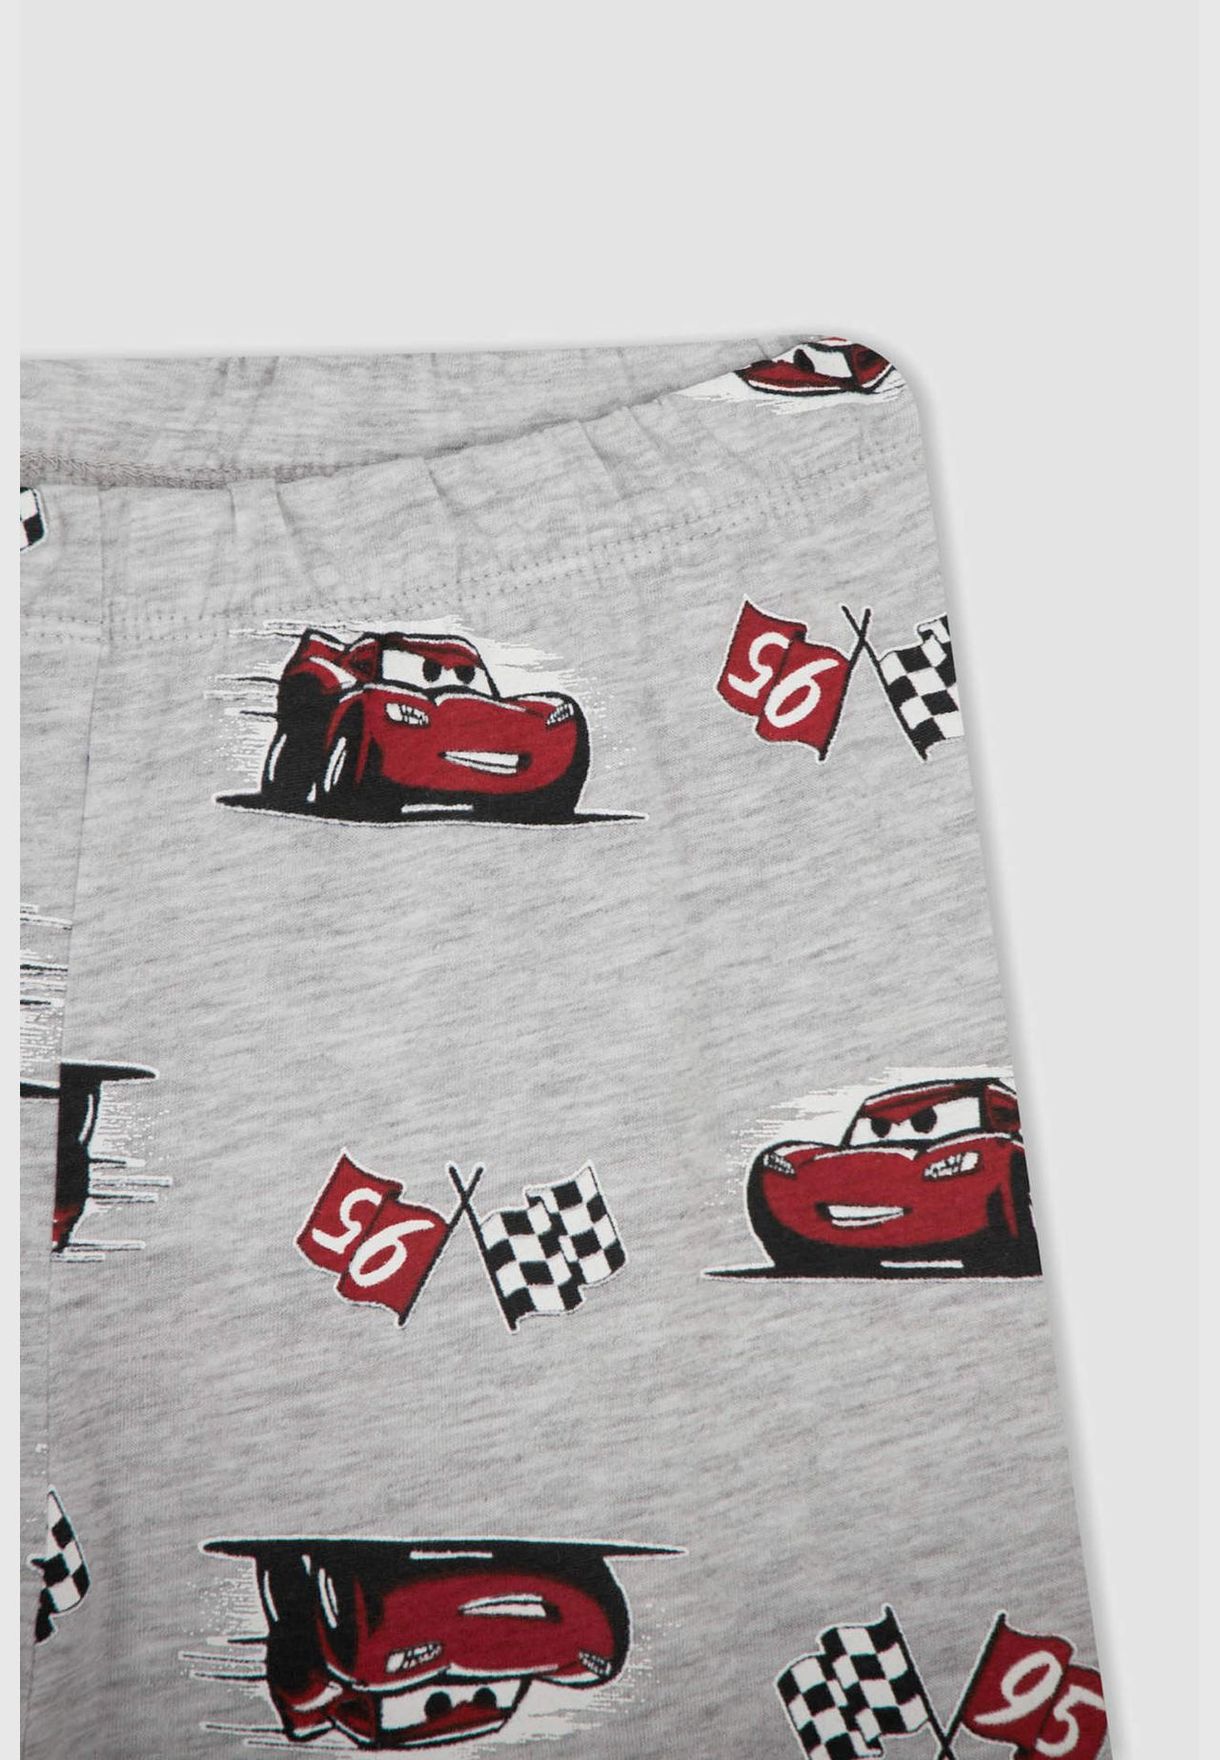 Short Sleeve Cars Printed Pyjama Set